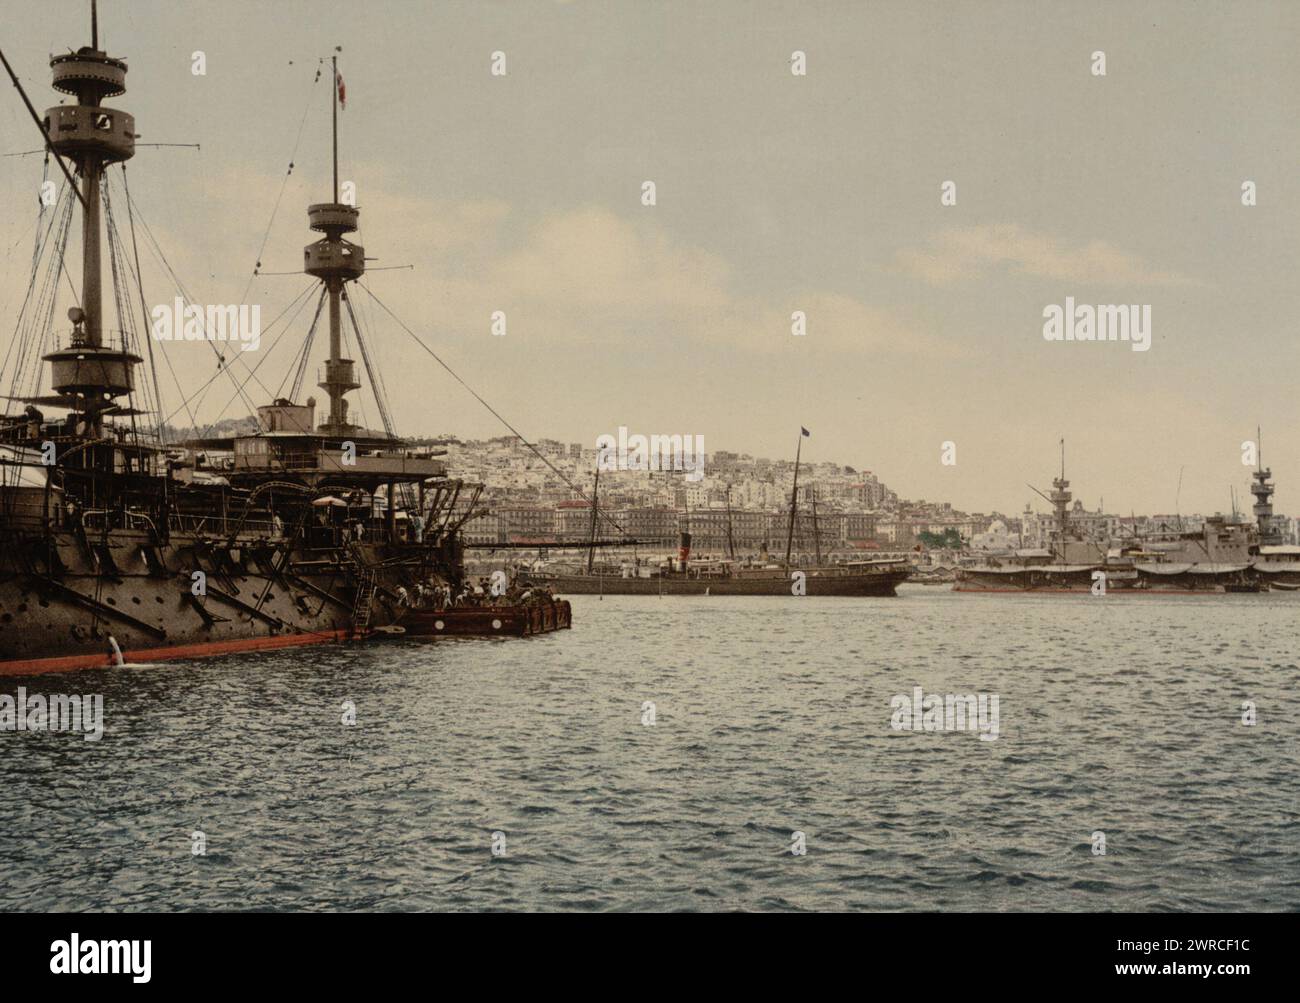 With war ships, Algiers, Algeria, ca. 1899., Color, 1890-1900 Stock Photo